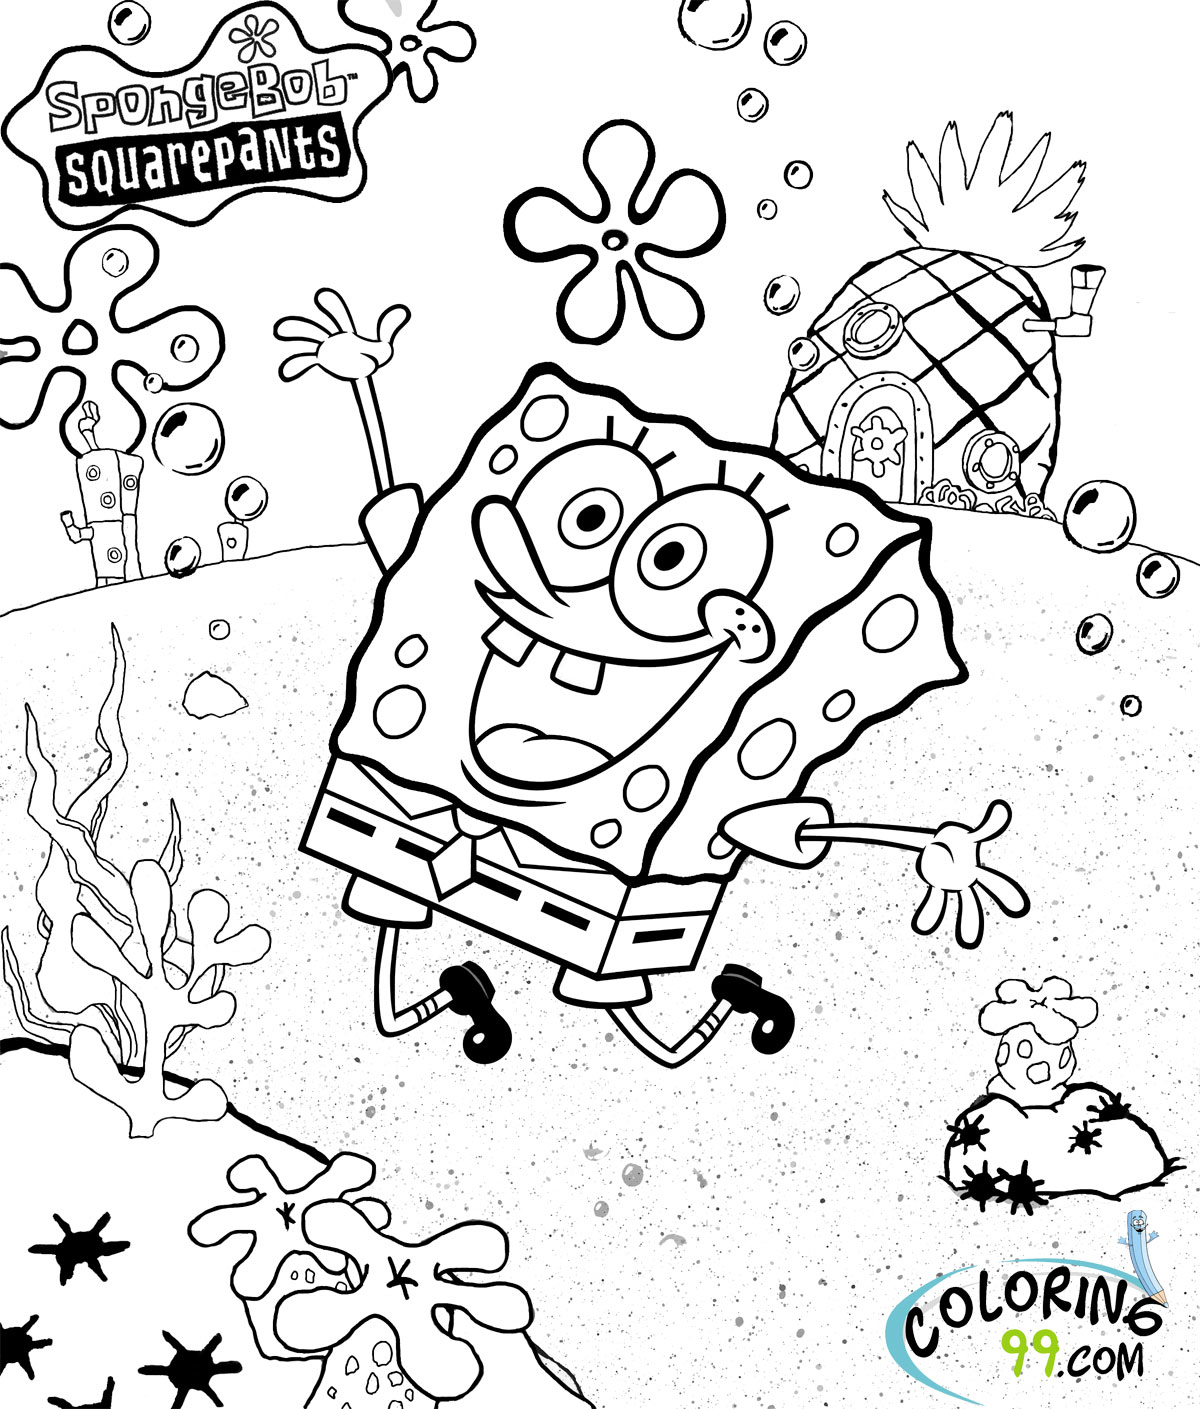 Download Spongebob Squarepants Coloring Pages | Minister Coloring